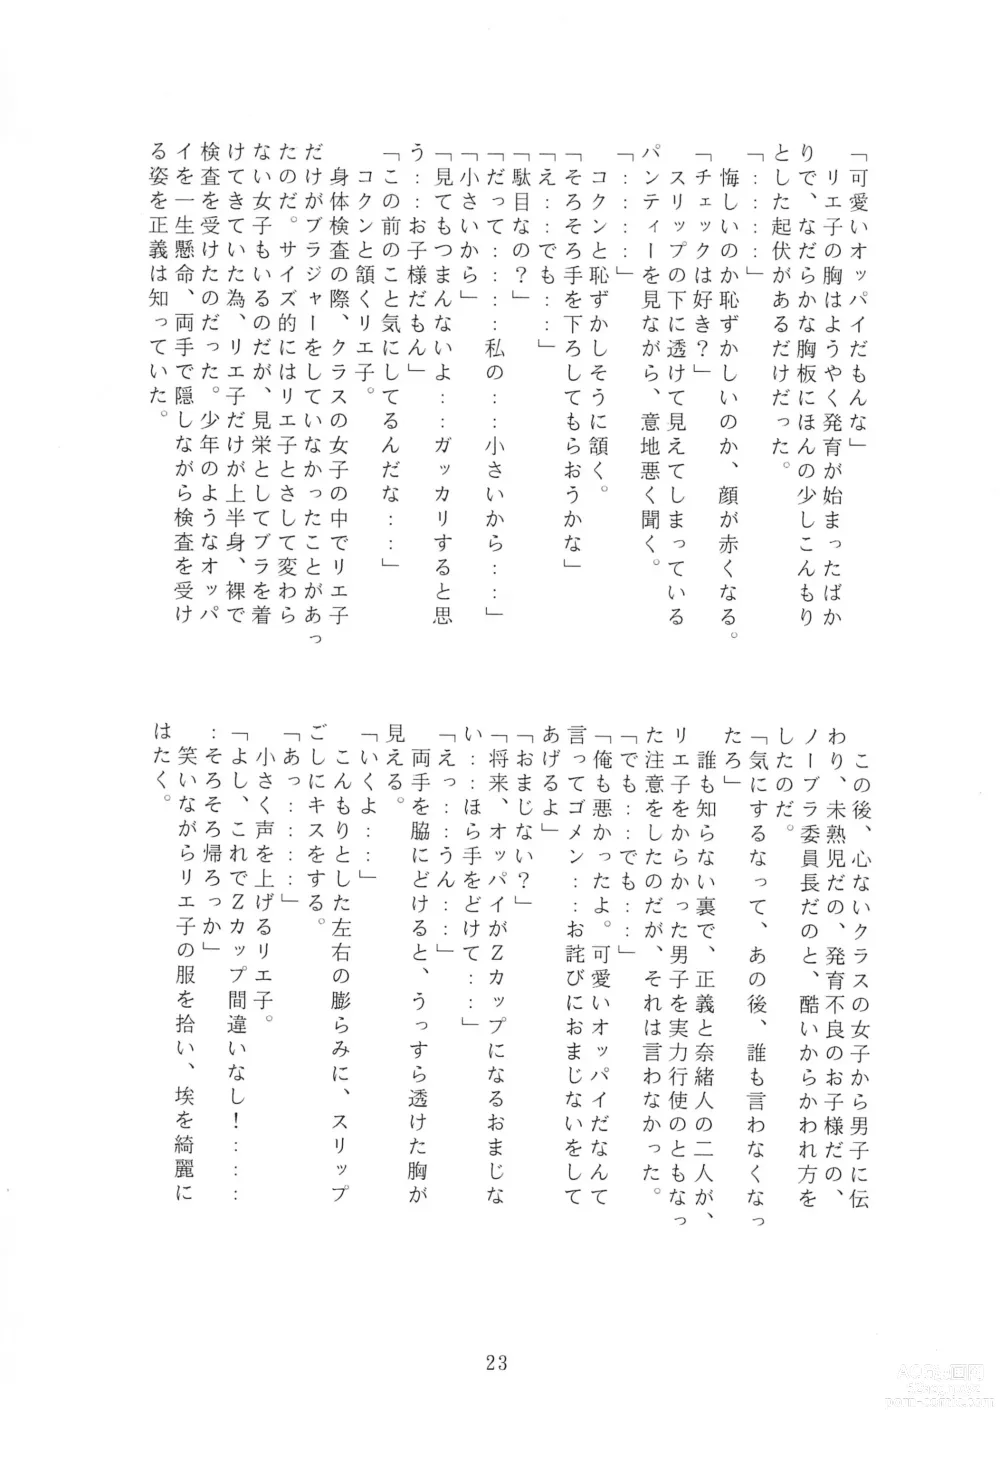 Page 23 of doujinshi JANGLE ONI Mermaid